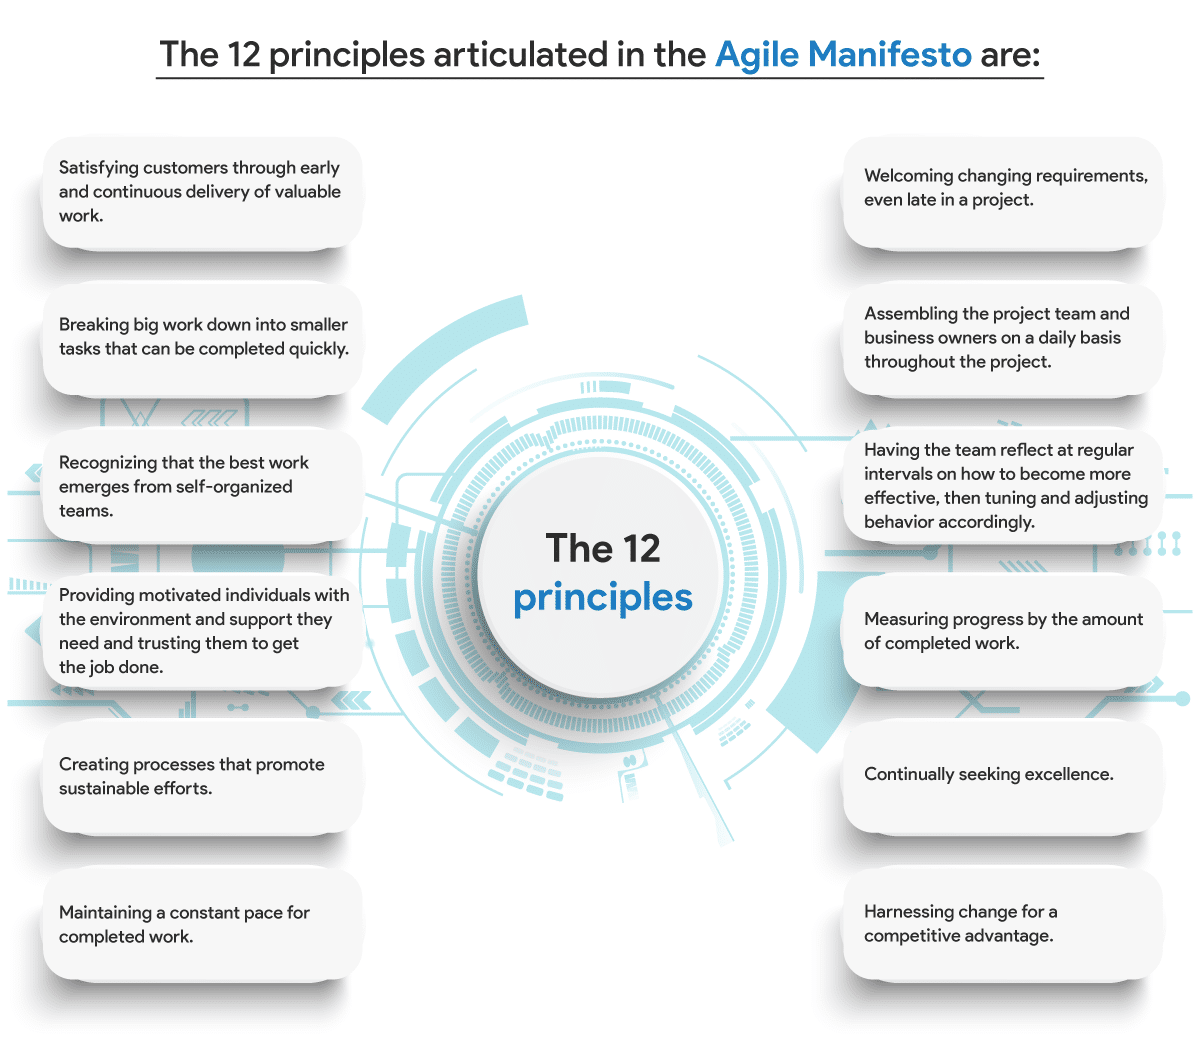 The 12 principles in the Agile Manifesto